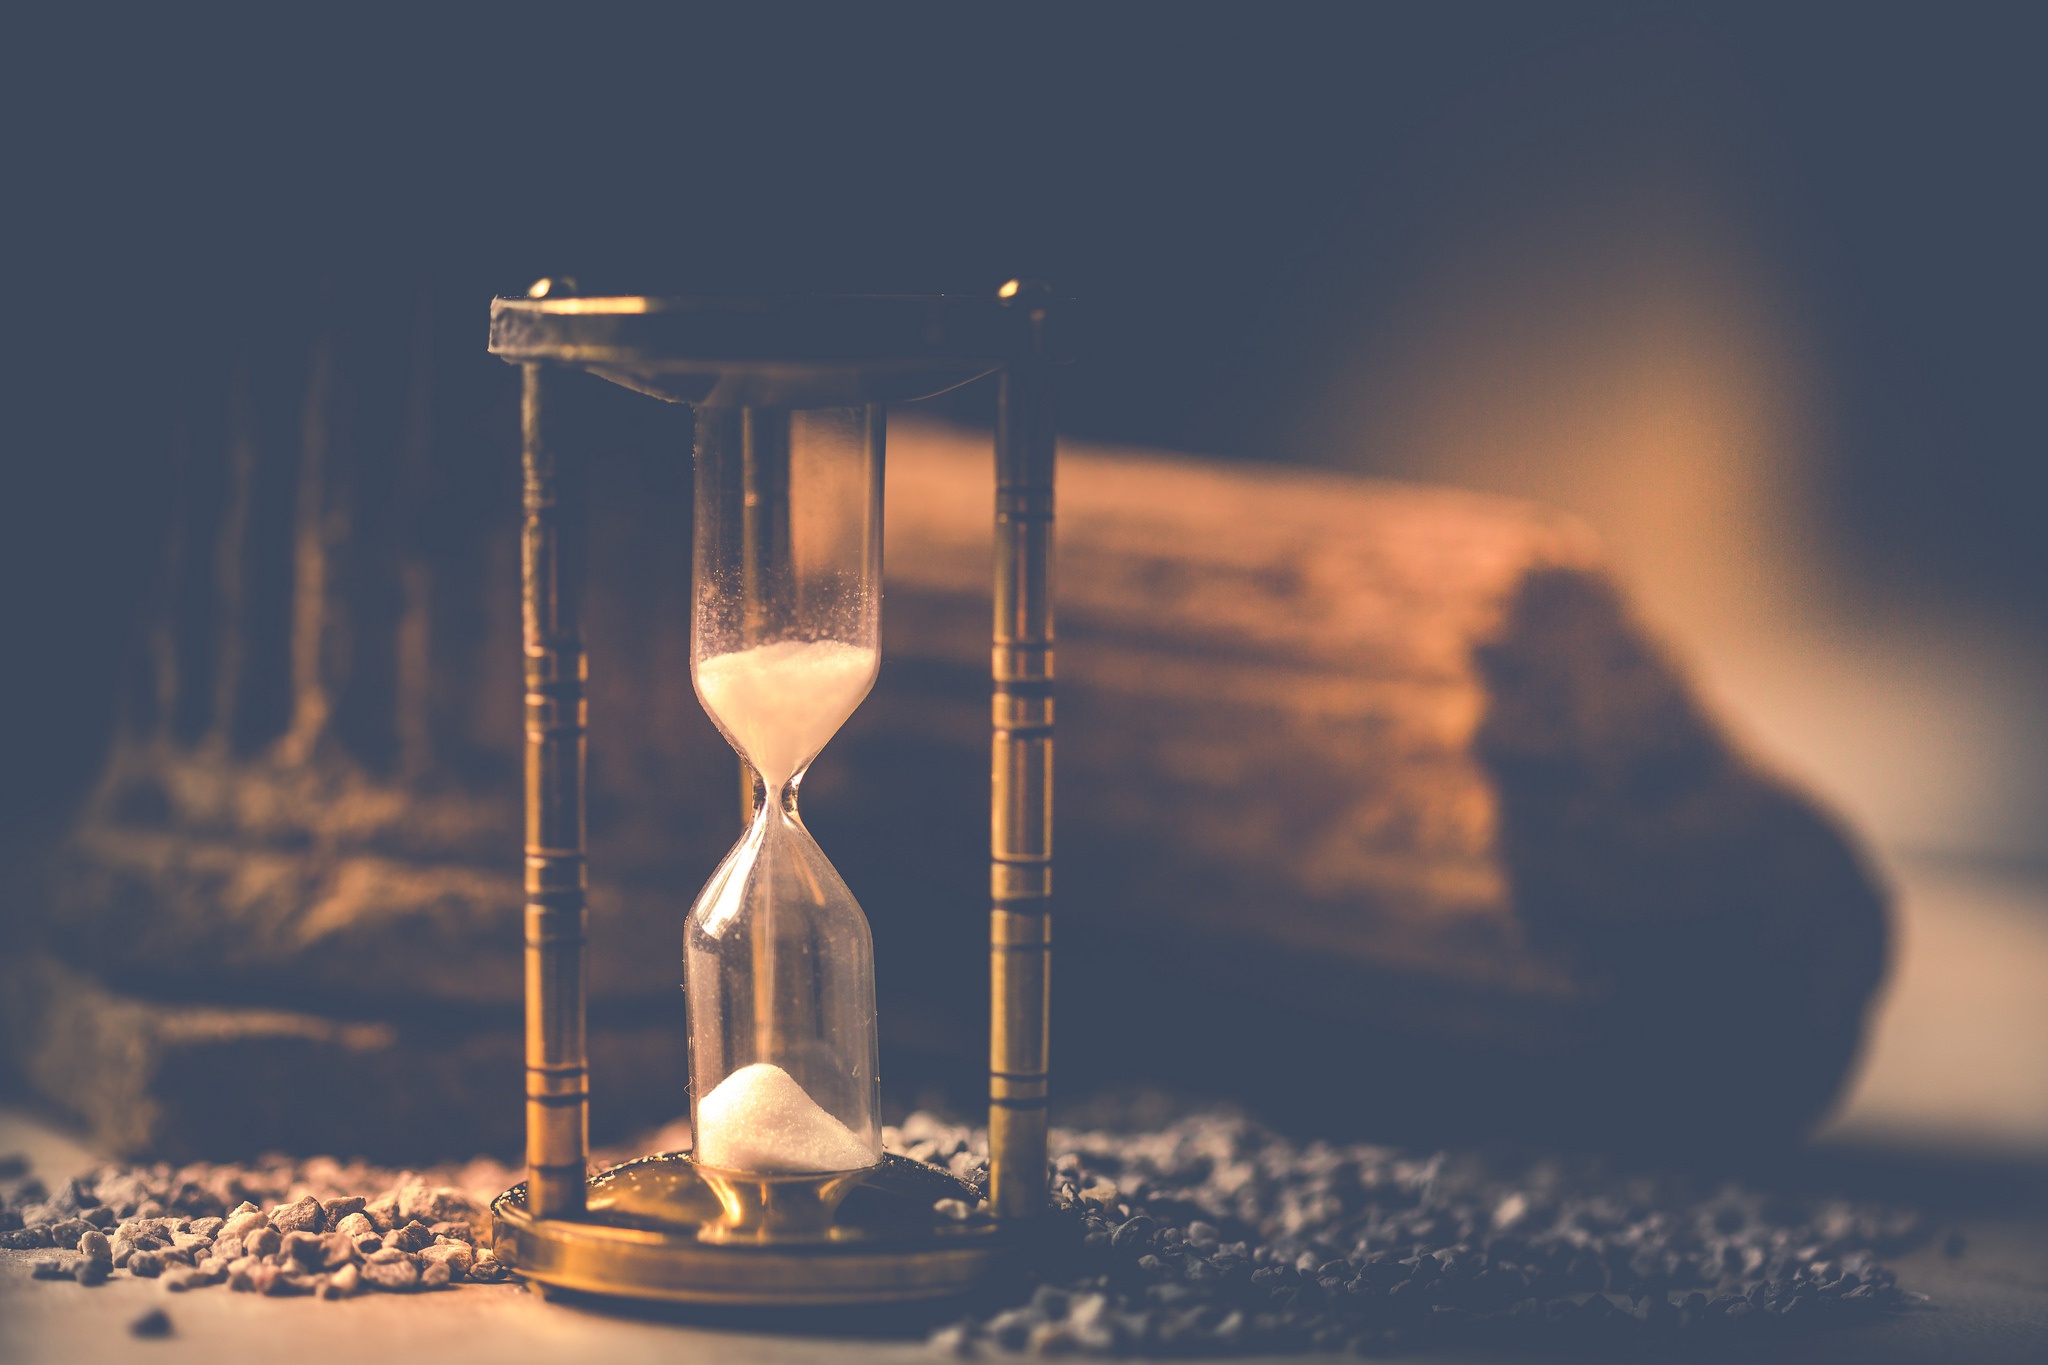 Wallpaper Time Clock Desktop  Free image on Pixabay